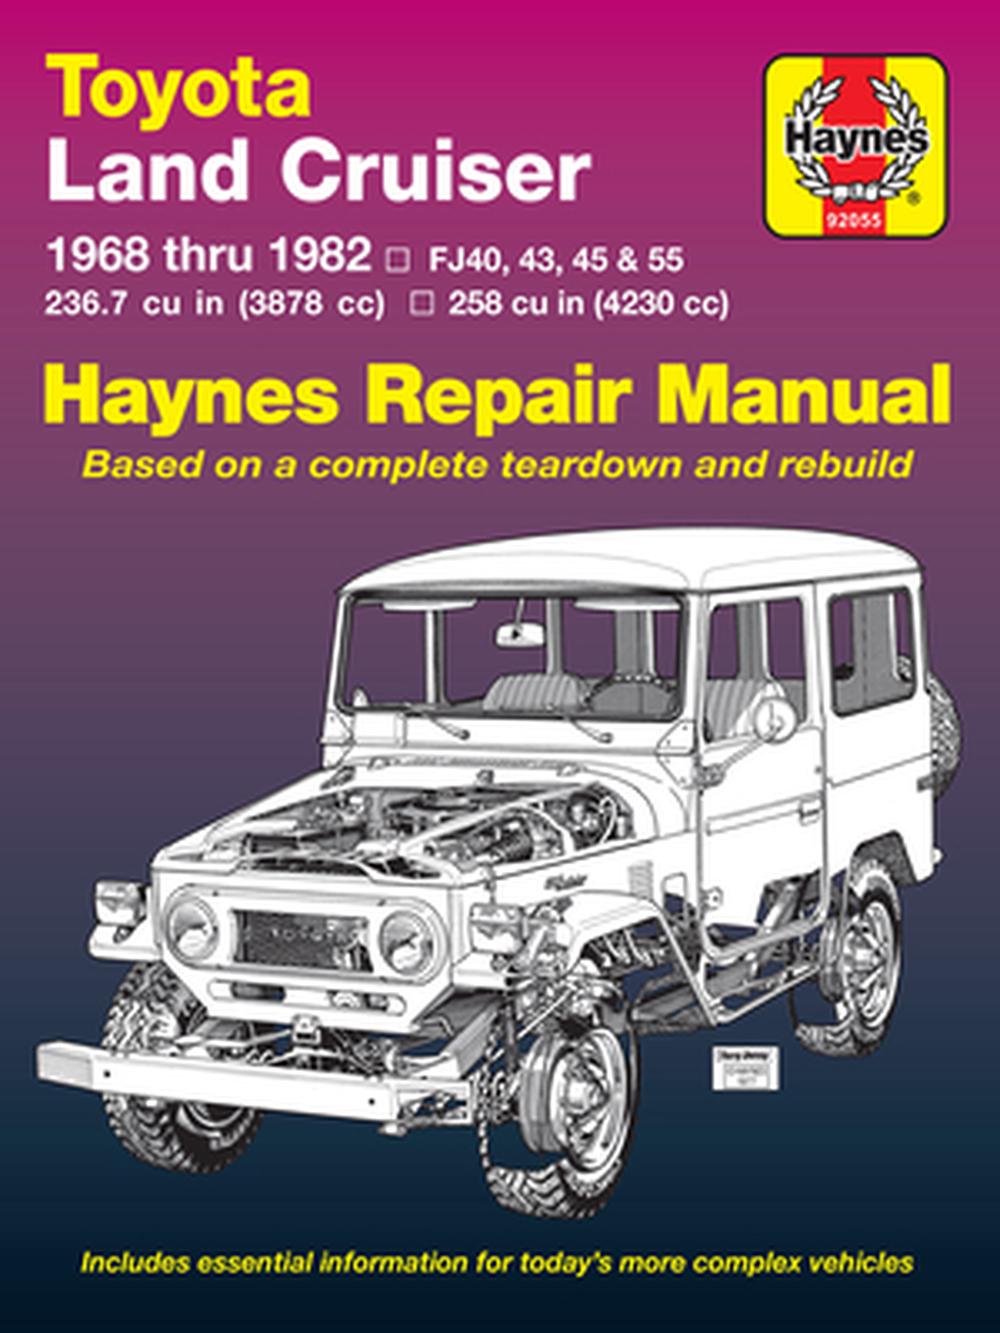 Haynes Toyota Land Cruiser Automotive Repair Manual 1968 Thru 1982 by